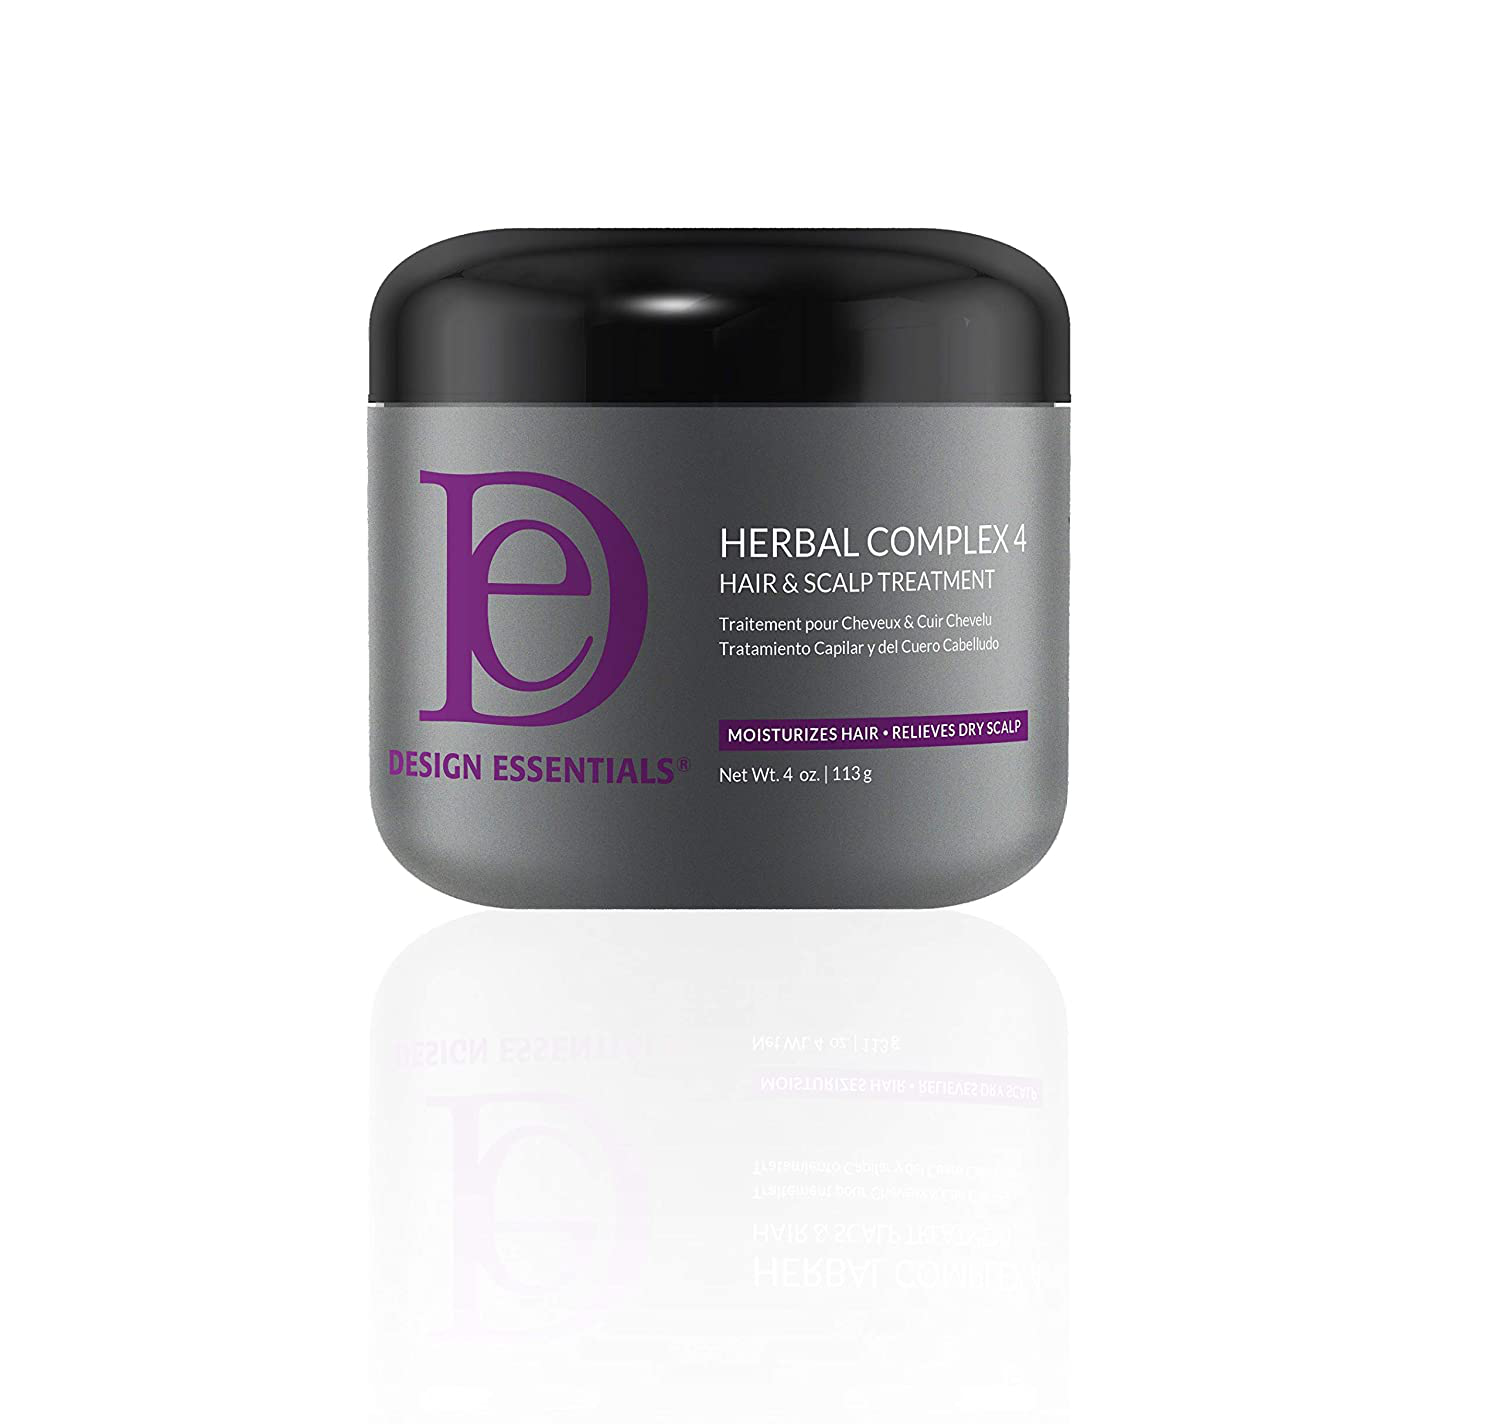 Design Essentials Herbal Complex 4 Hair & Scalp Treatment - 4 Oz